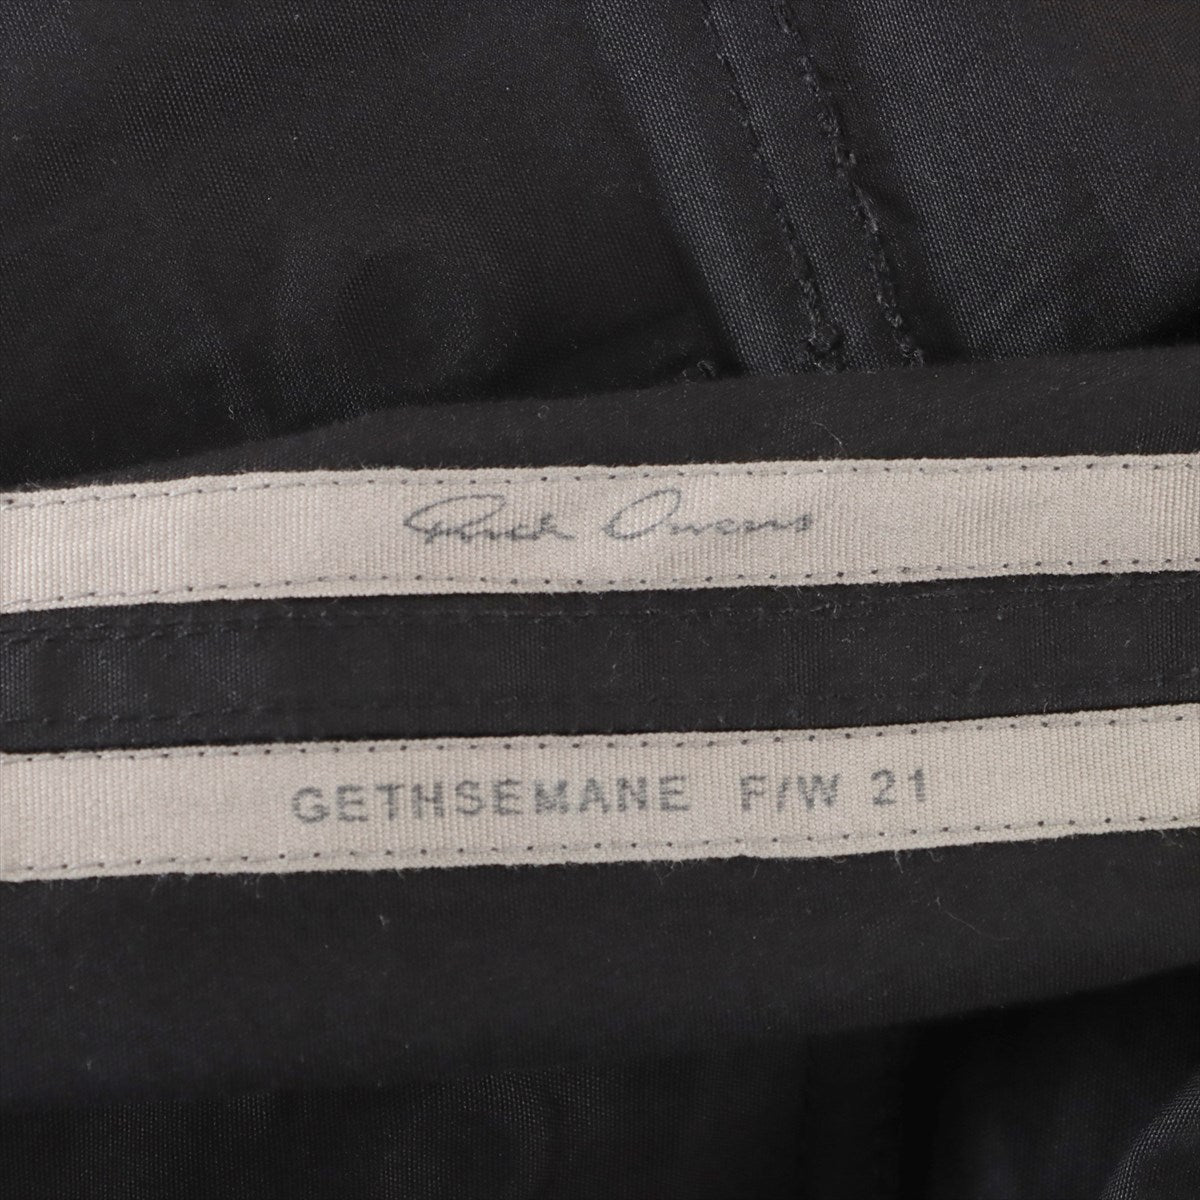 Rick Owens 21AW Cotton Cargo pants 50 Men's Black  RU02A5377-TE Bauhaus cargo pants GETHSEMANE period